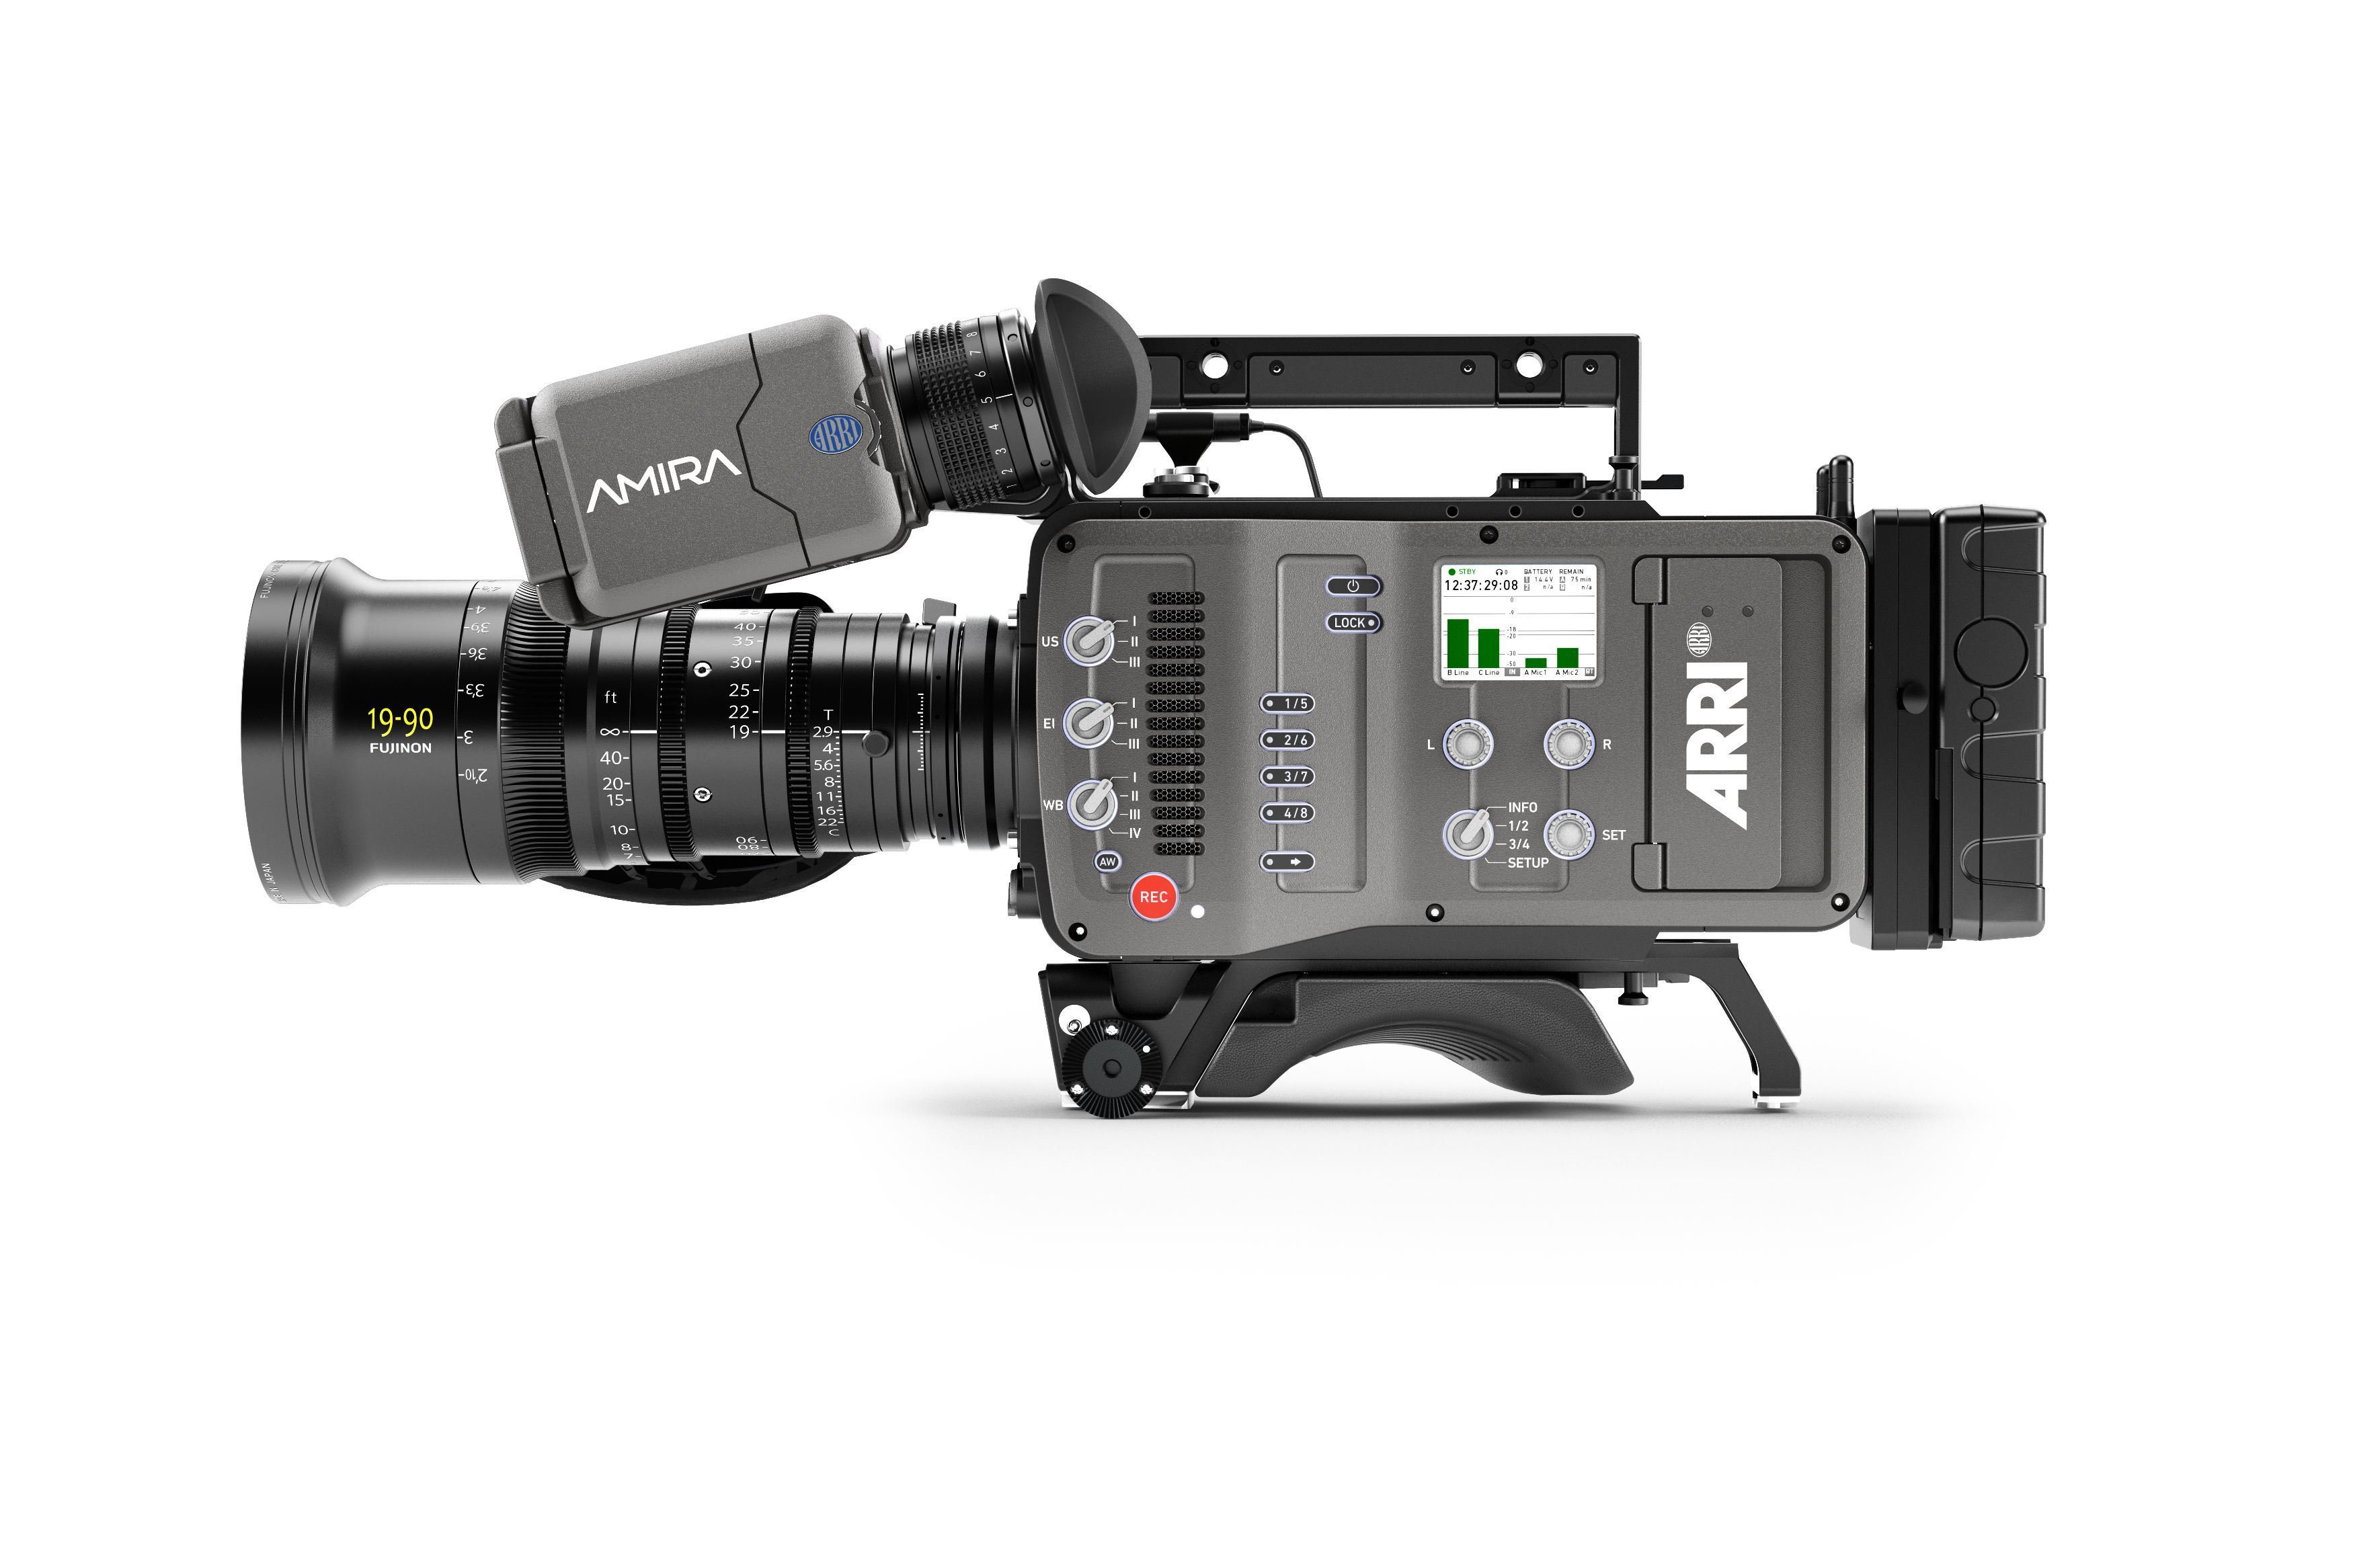 Cutting-edge 12G-SDI Cameras Revolutionize The World of High-quality Video Capture